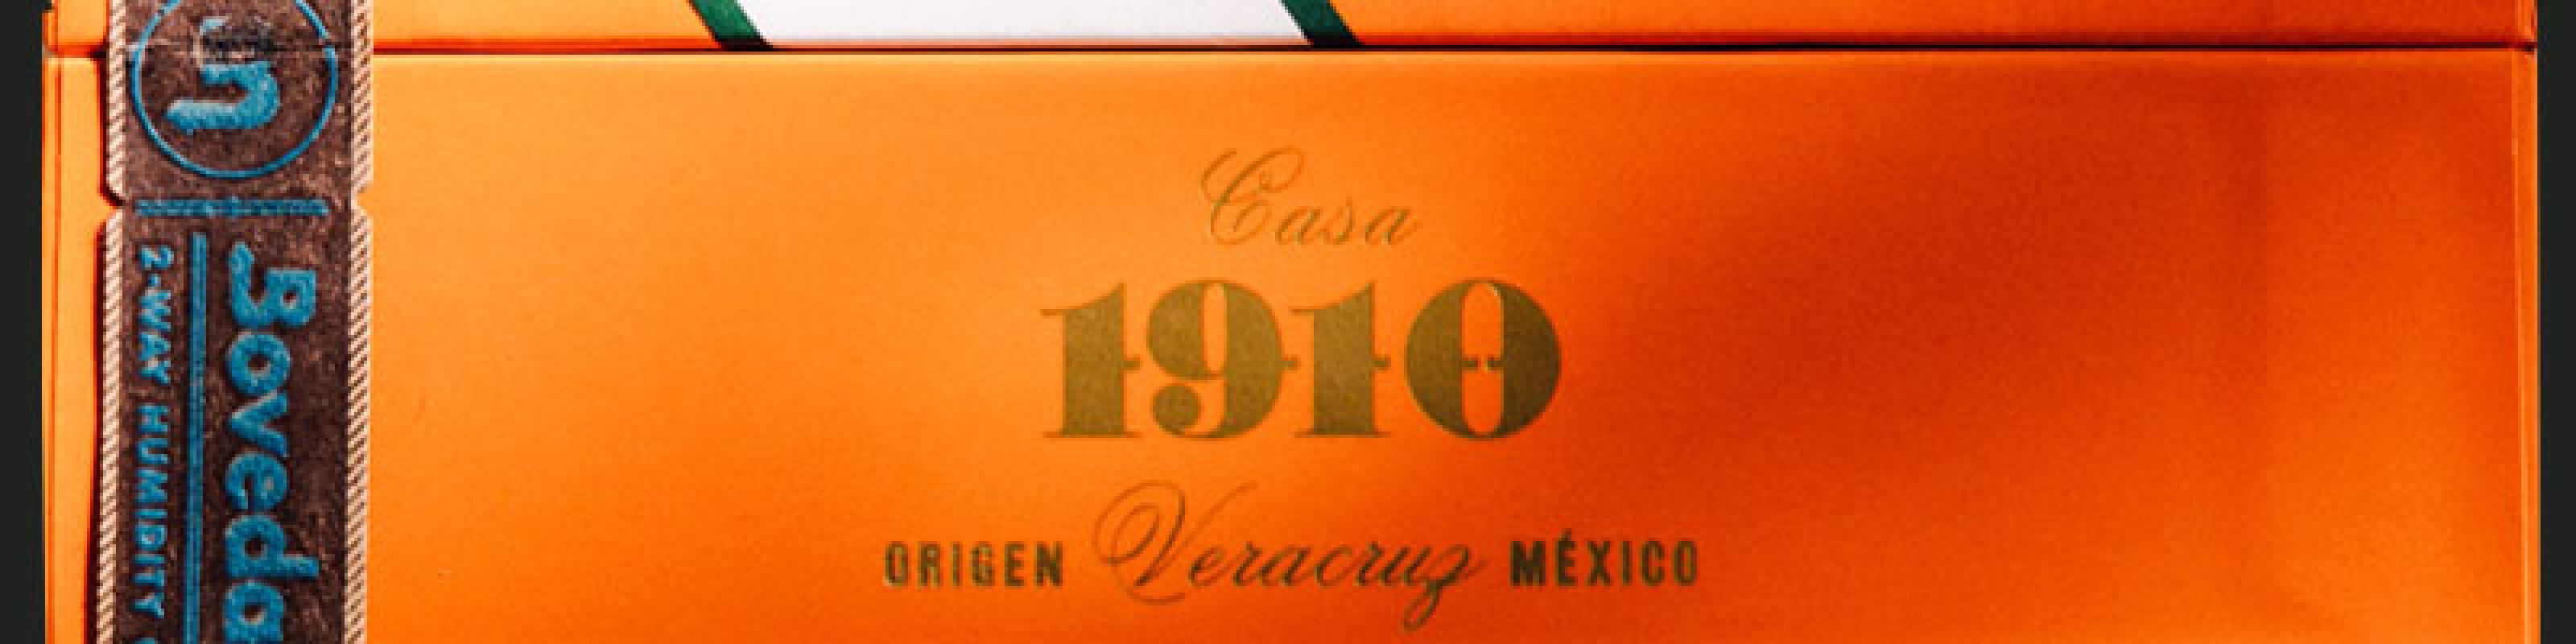 Casa 1910 starting price